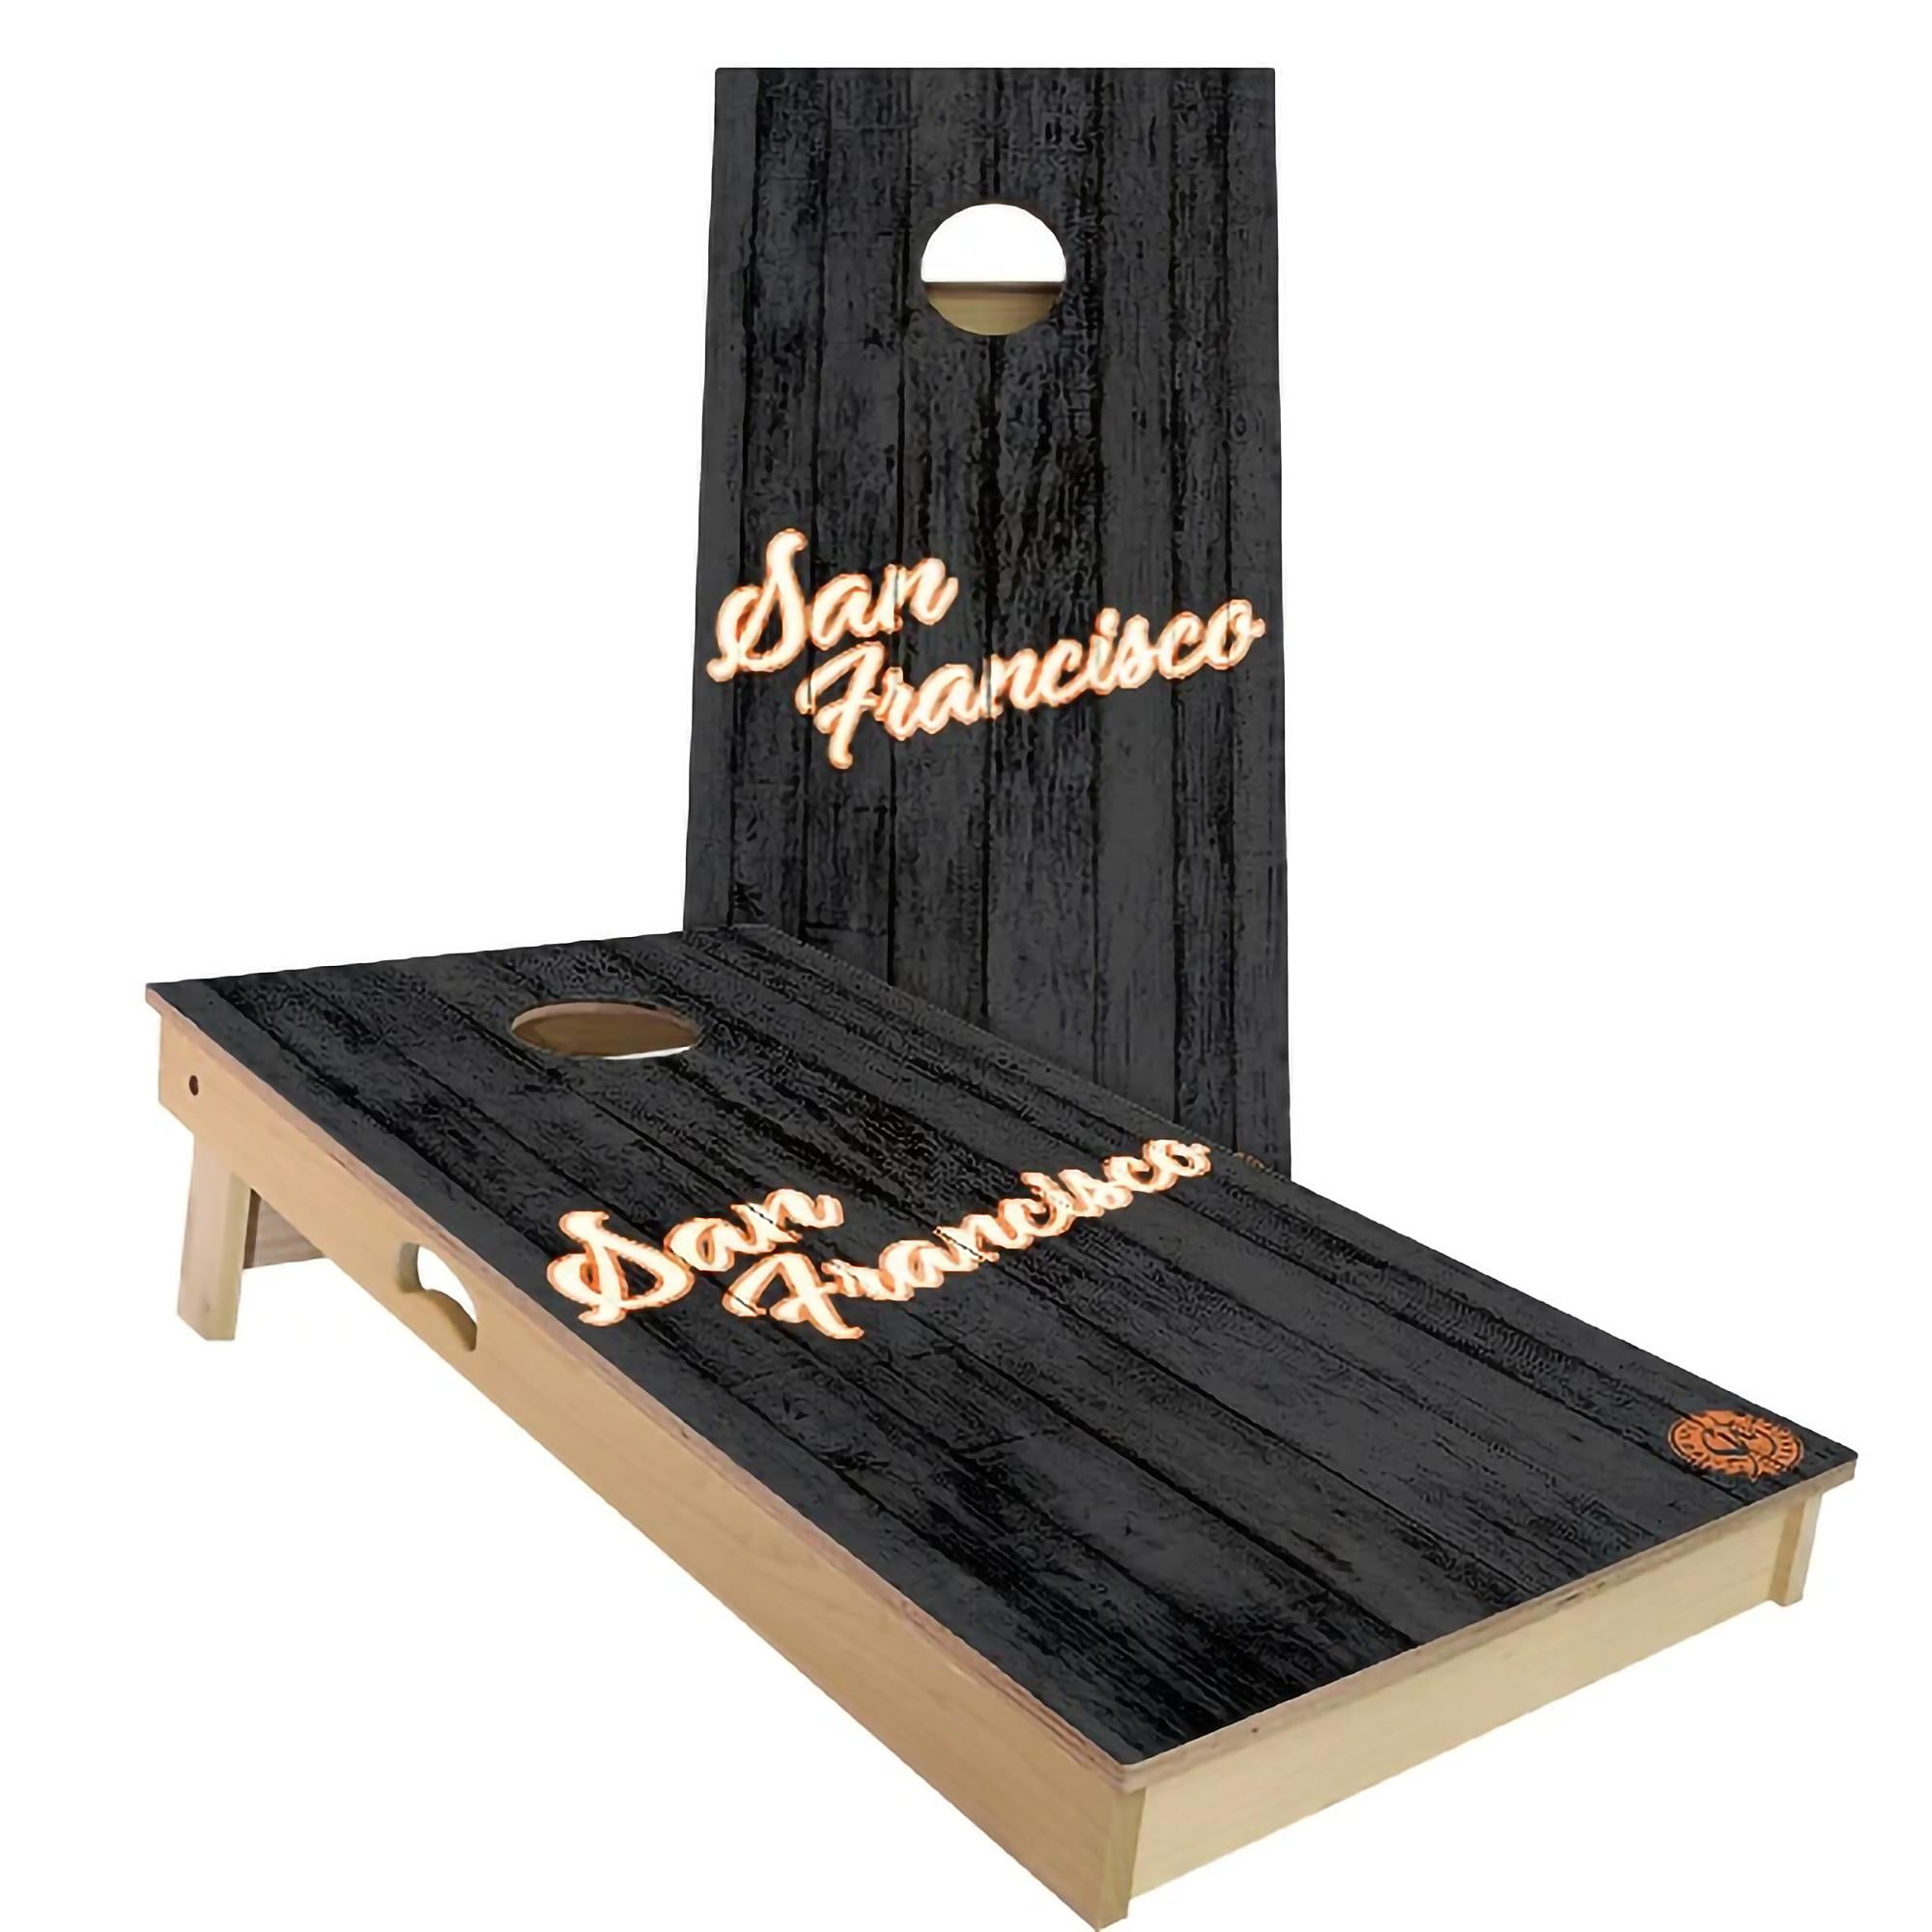 Details about   San Francisco Vintage Cornhole Board Set 2 Sizes Many Options Available 